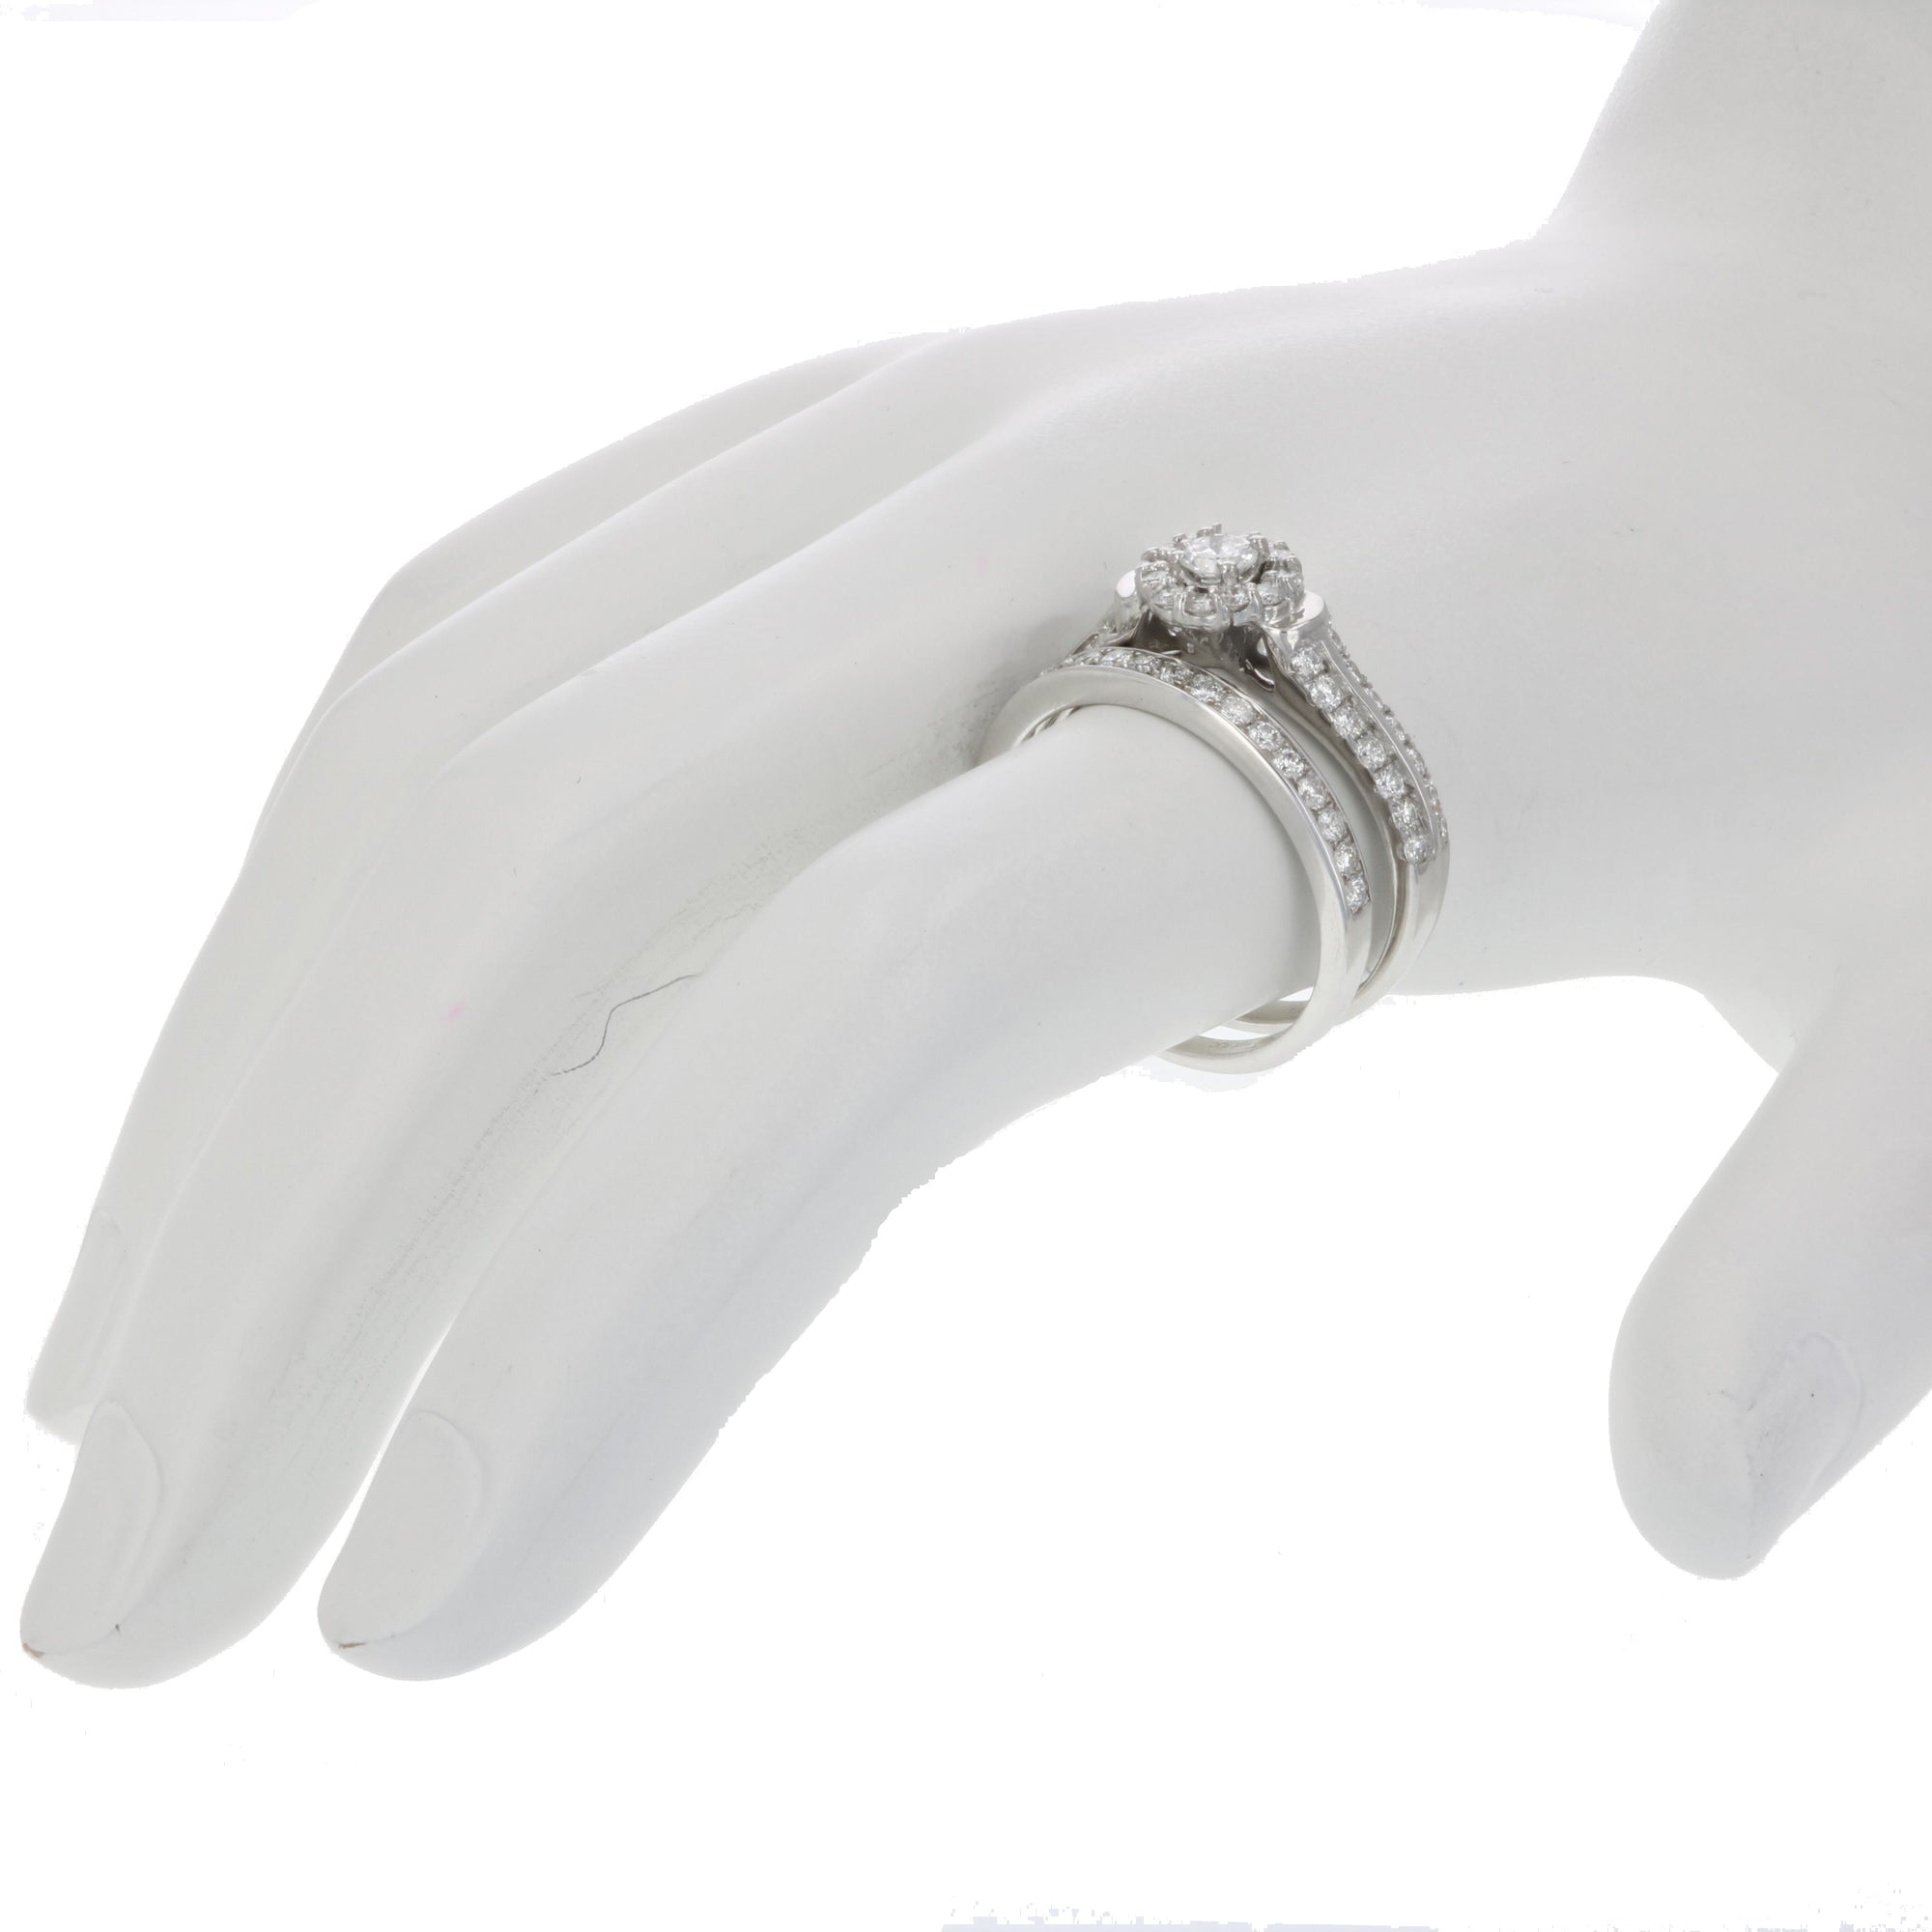 1 cttw Diamond Halo Cluster Wedding Engagement Ring Set 14K White Gold Bridal